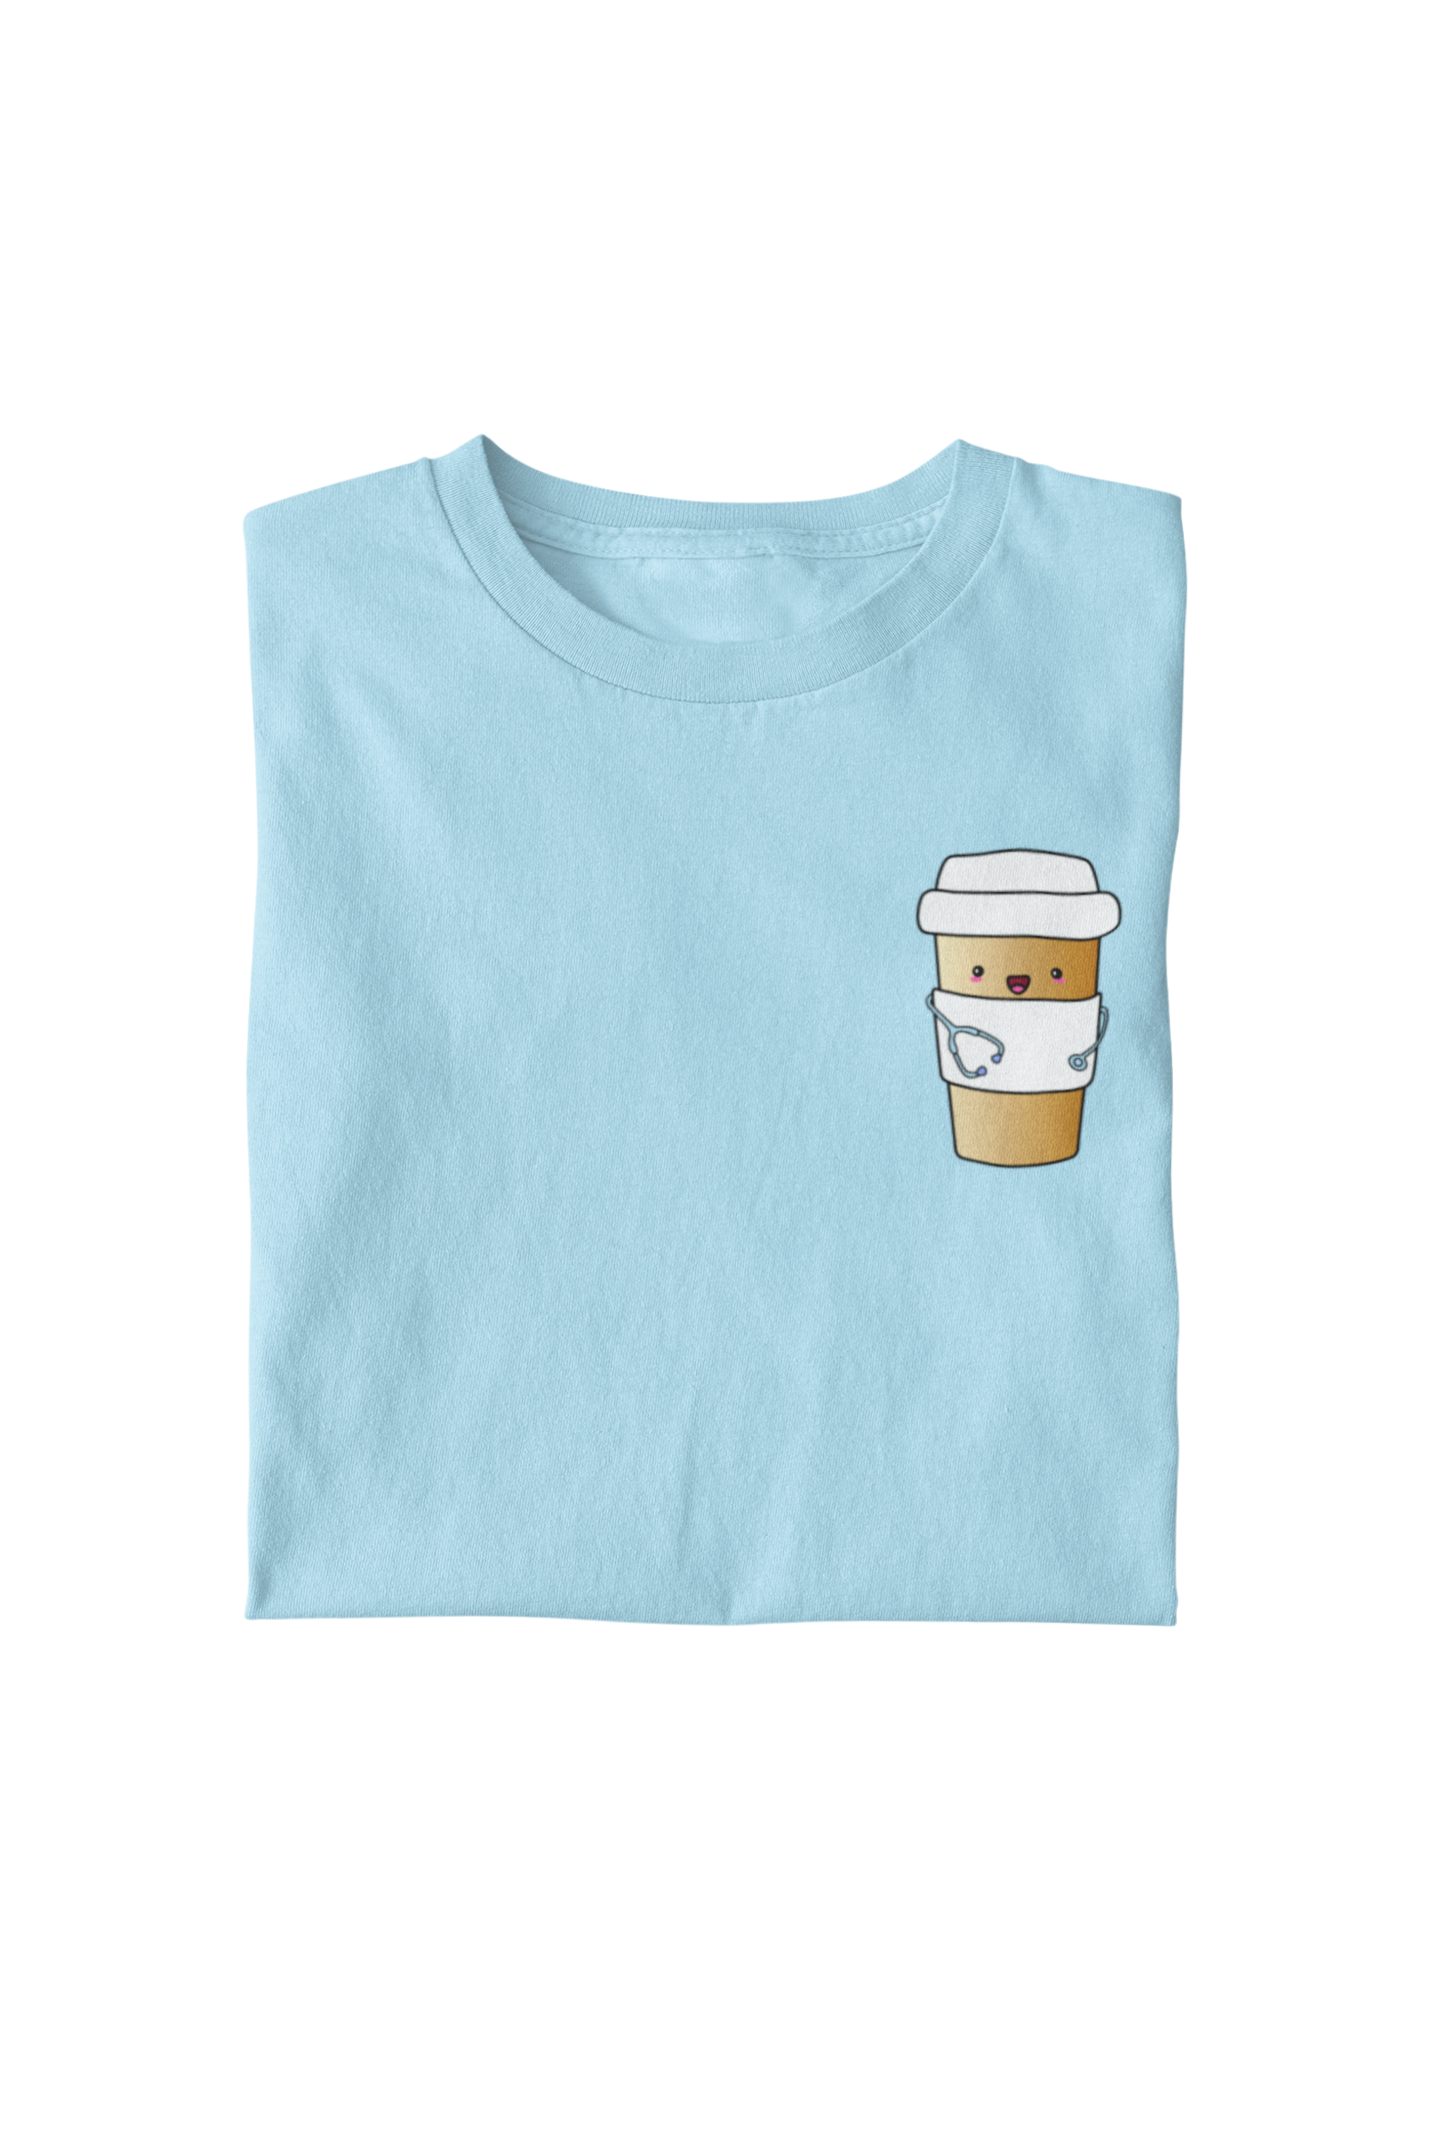 COFFEE CUP - Unisex Kawaii T Shirt